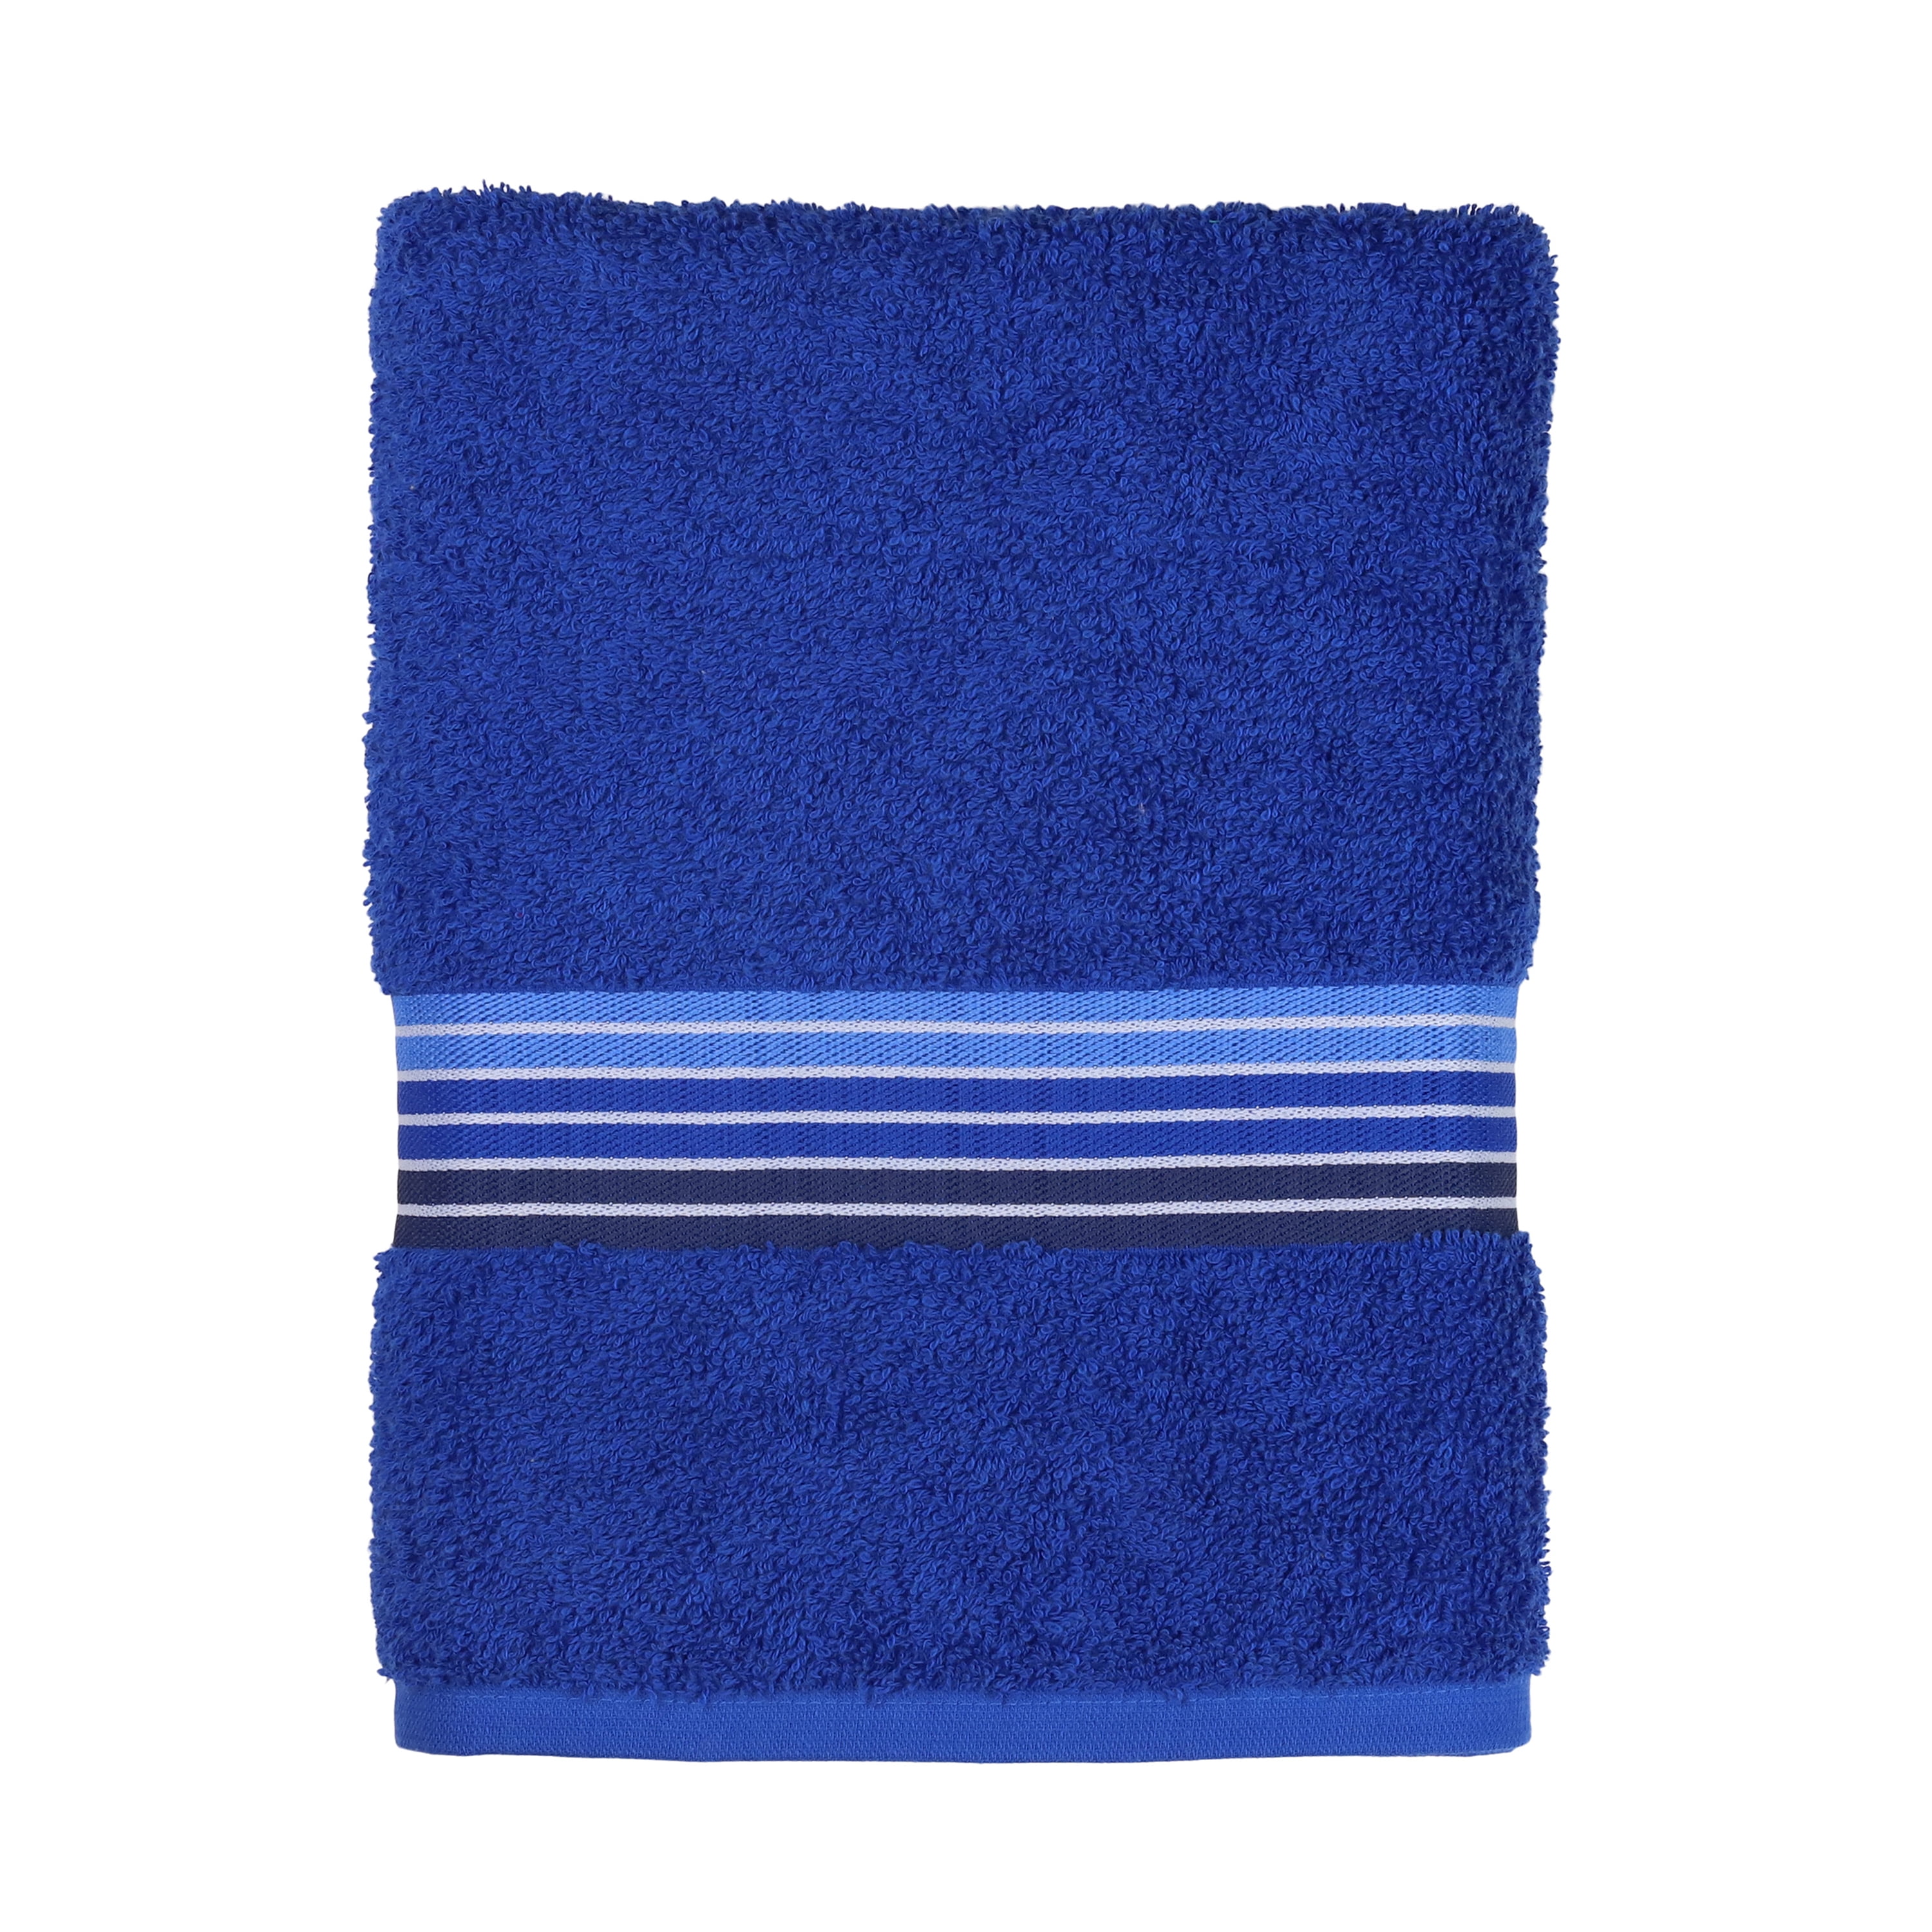 Mainstays Ombre Stripe Bath Towel, Royal Spice